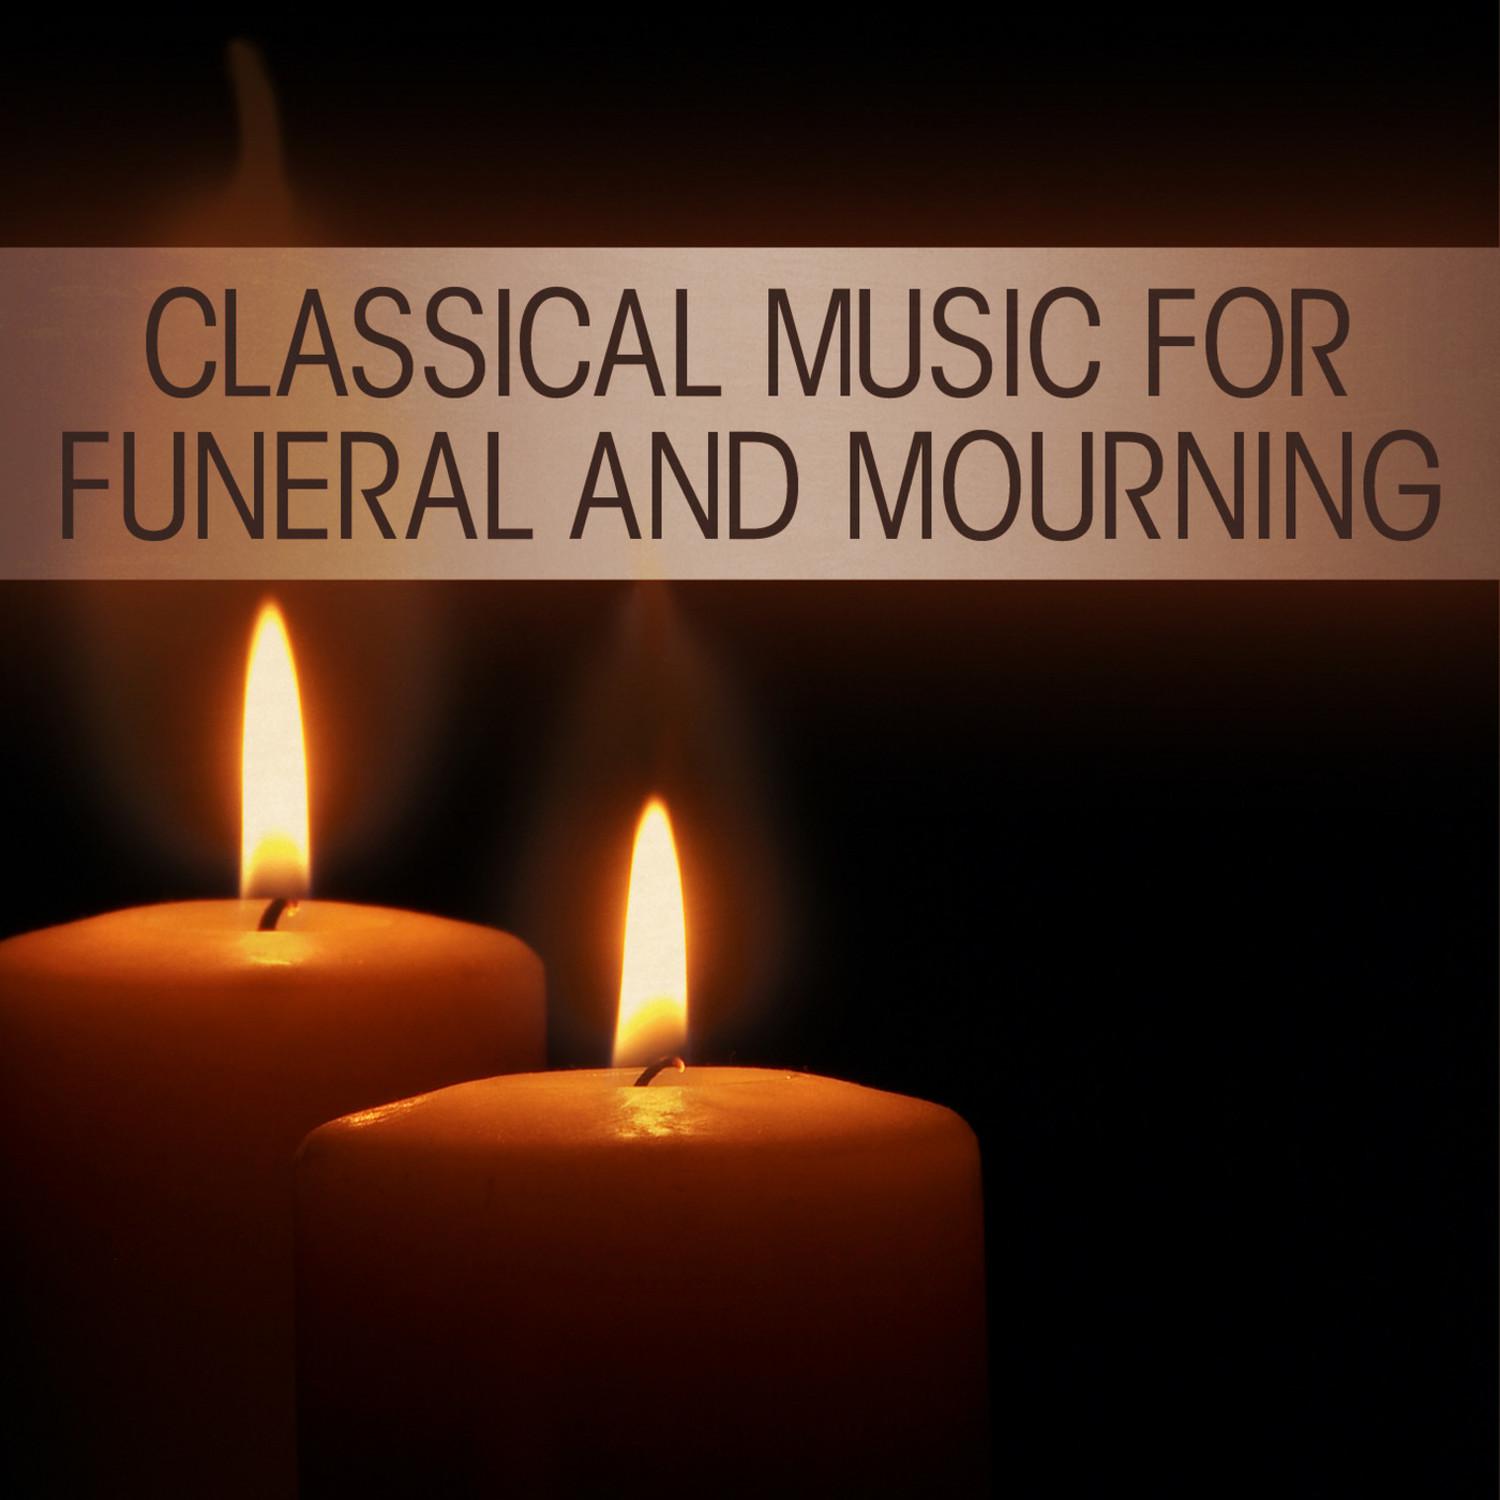 Sonata for Piano No. 12, Op. 26 in A Flat Major: Marcia funebre sulla morte d'un eroe